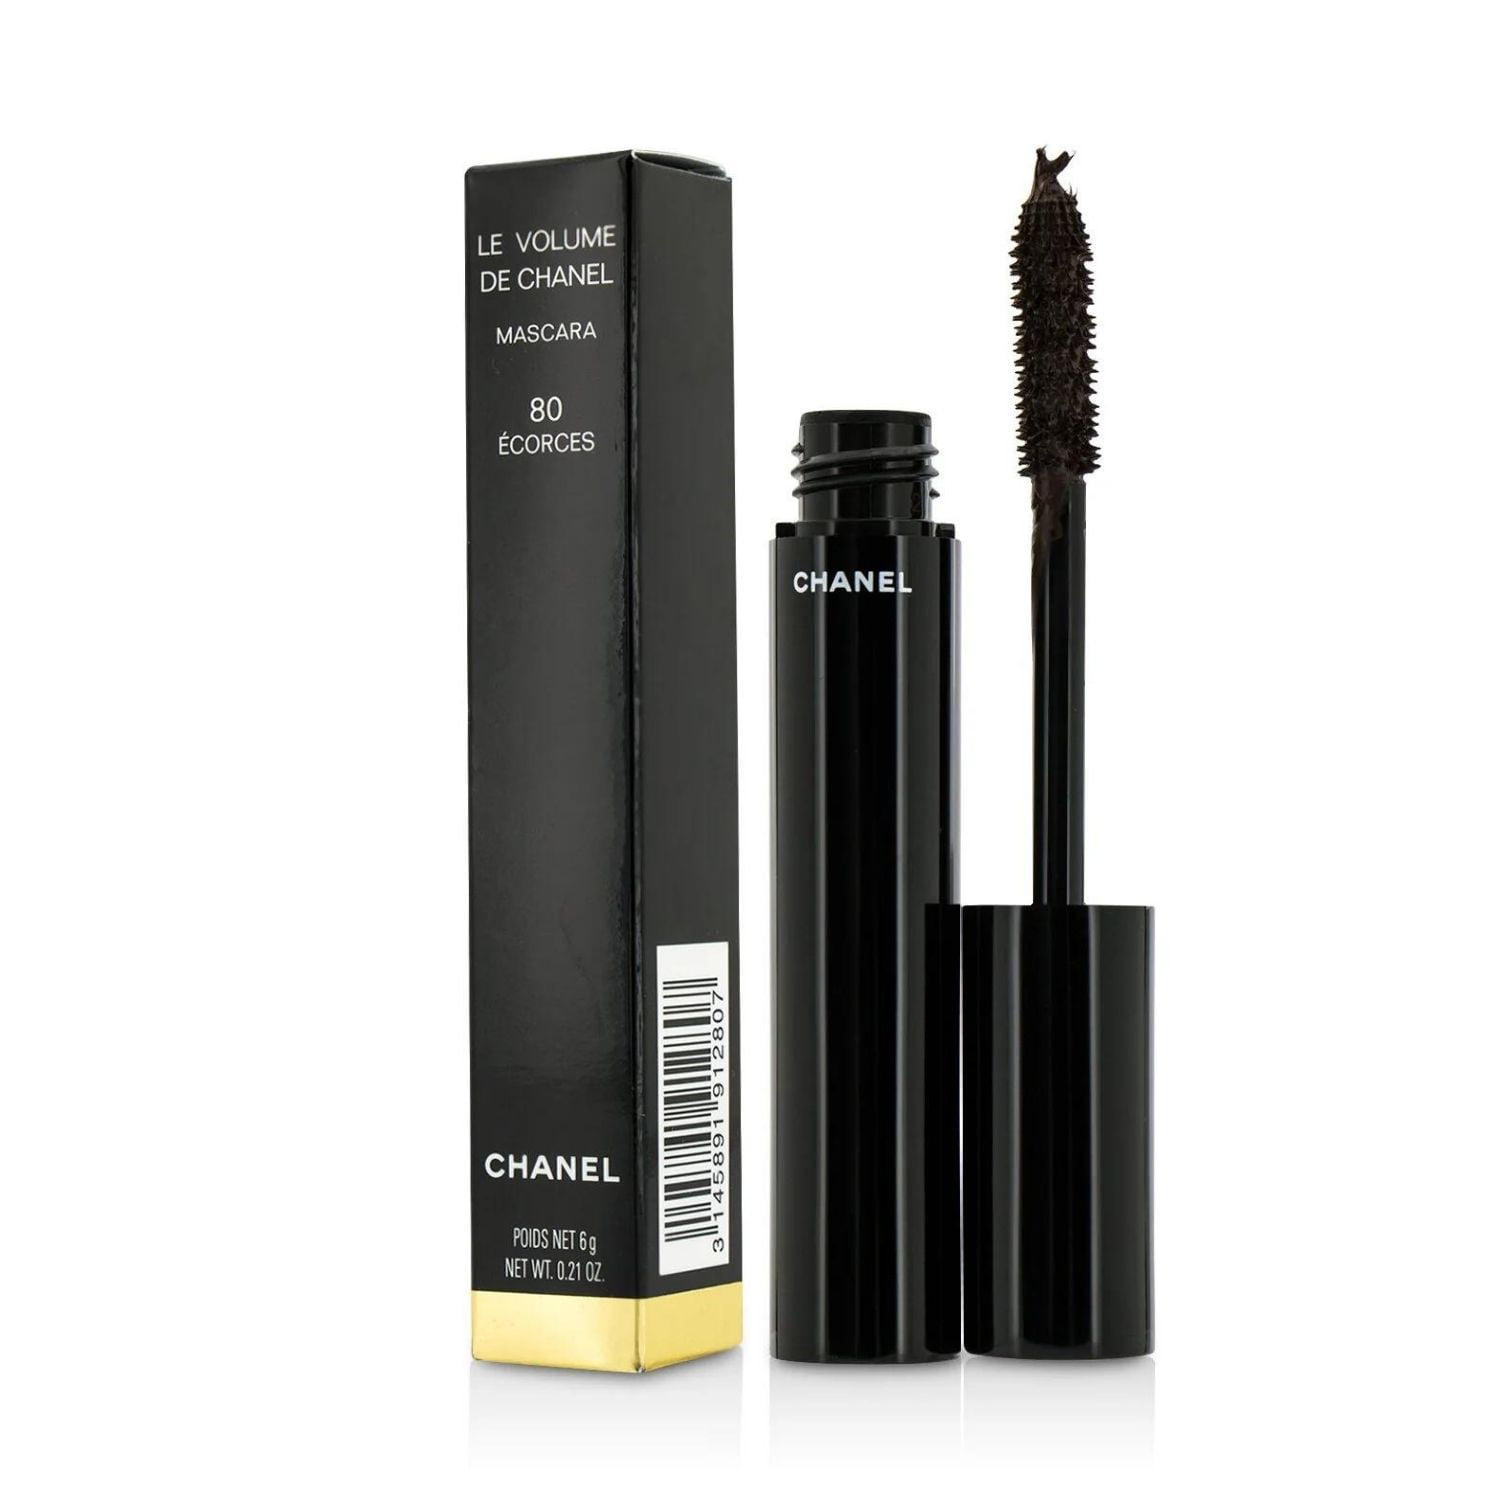 Chanel Le Volume De Chanel Mascara #80 Ecorces, 6 g / 0.21 oz